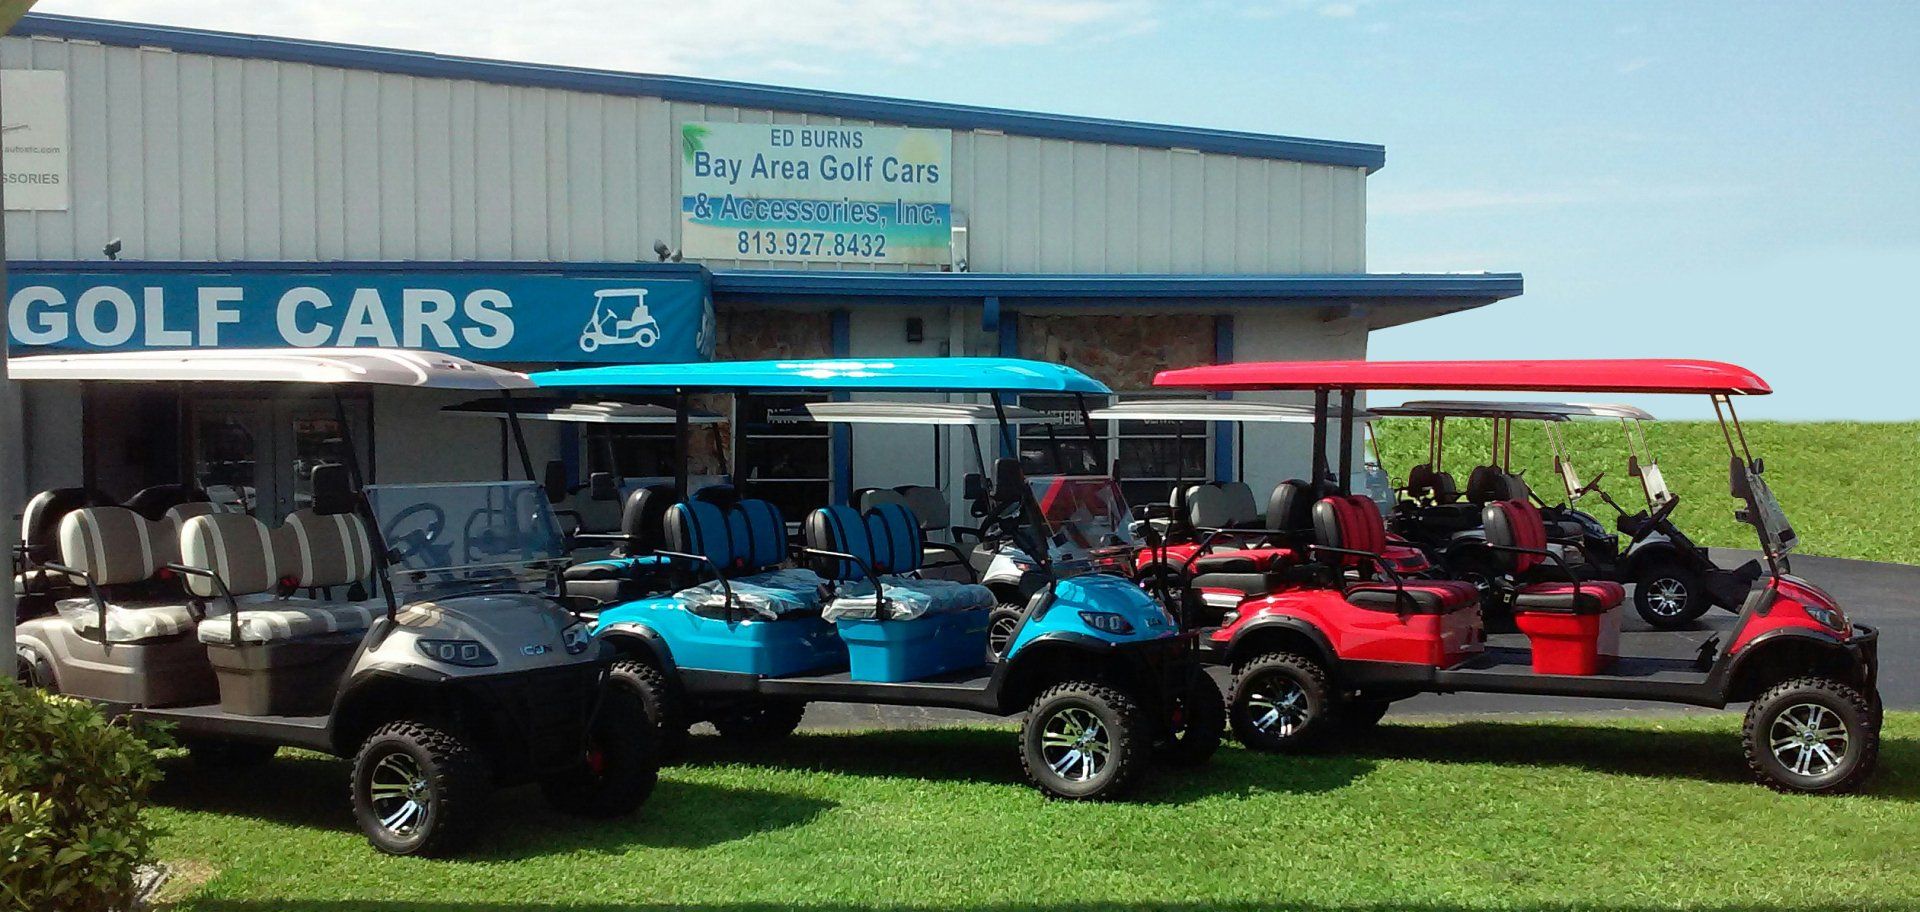 Three Golf Carts — St. Petersburg, FL — Ed Burns Bay Area Golf Cars